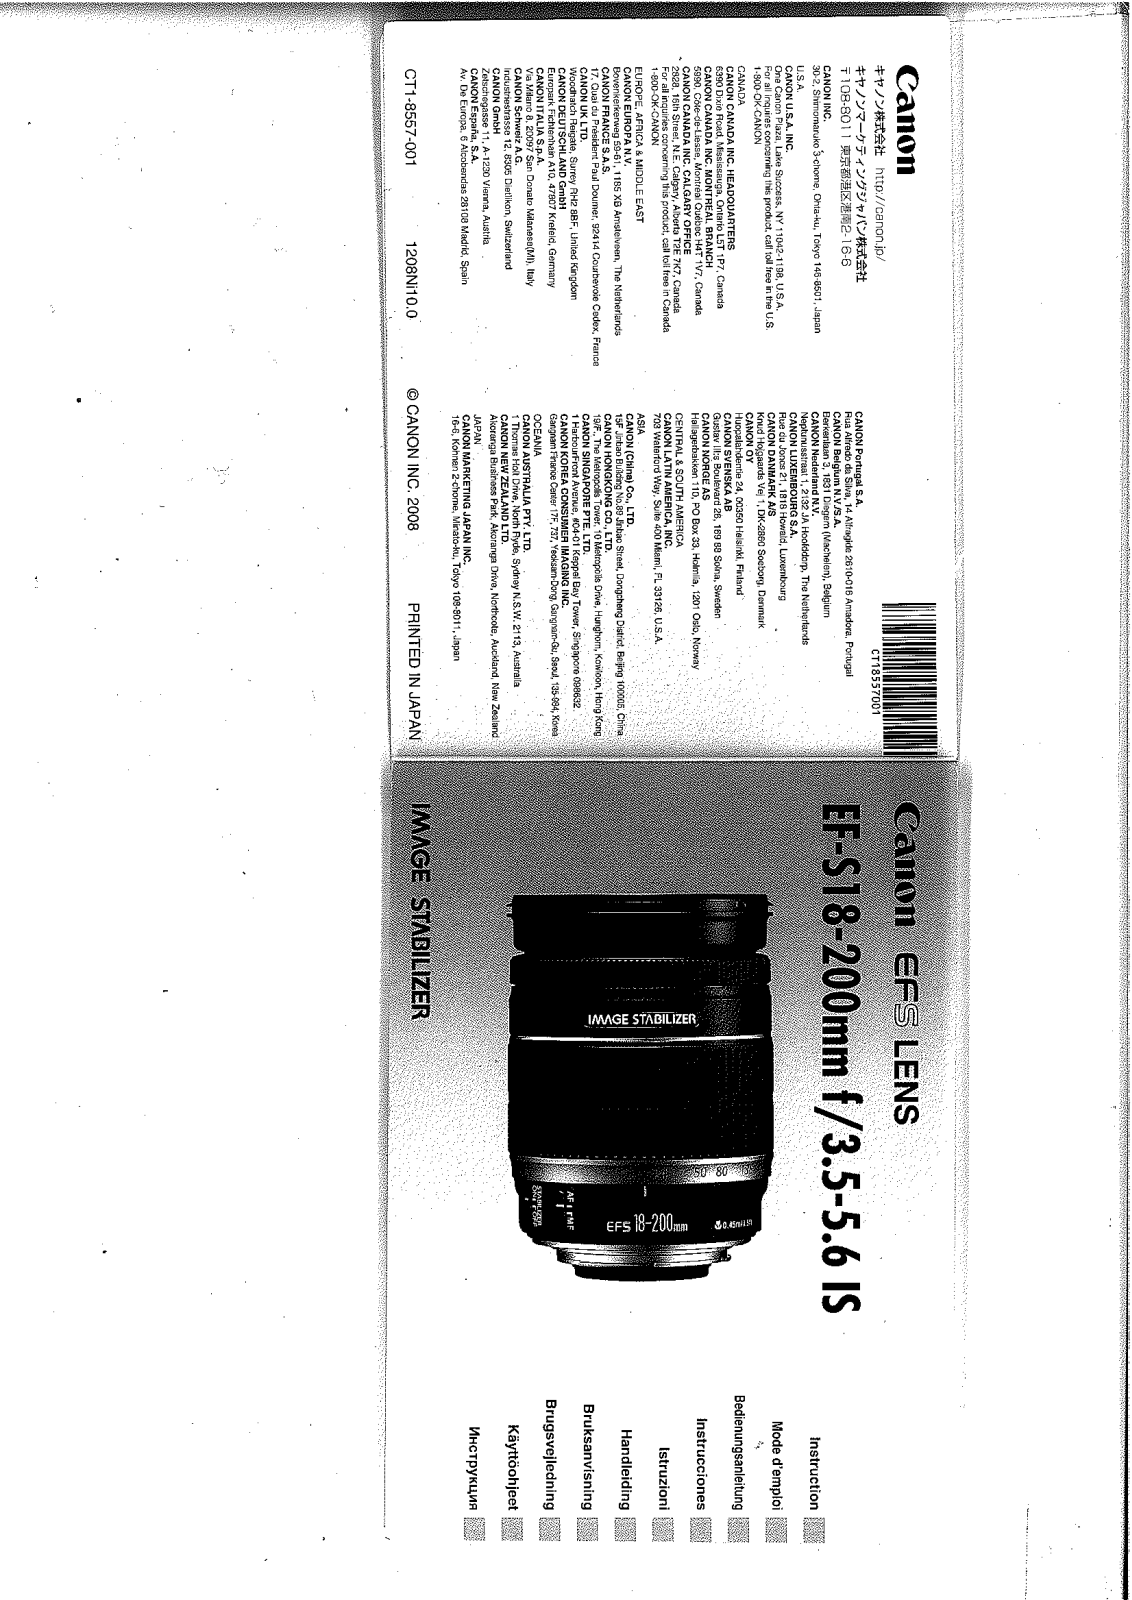 Canon EFS 18-200 User Manual